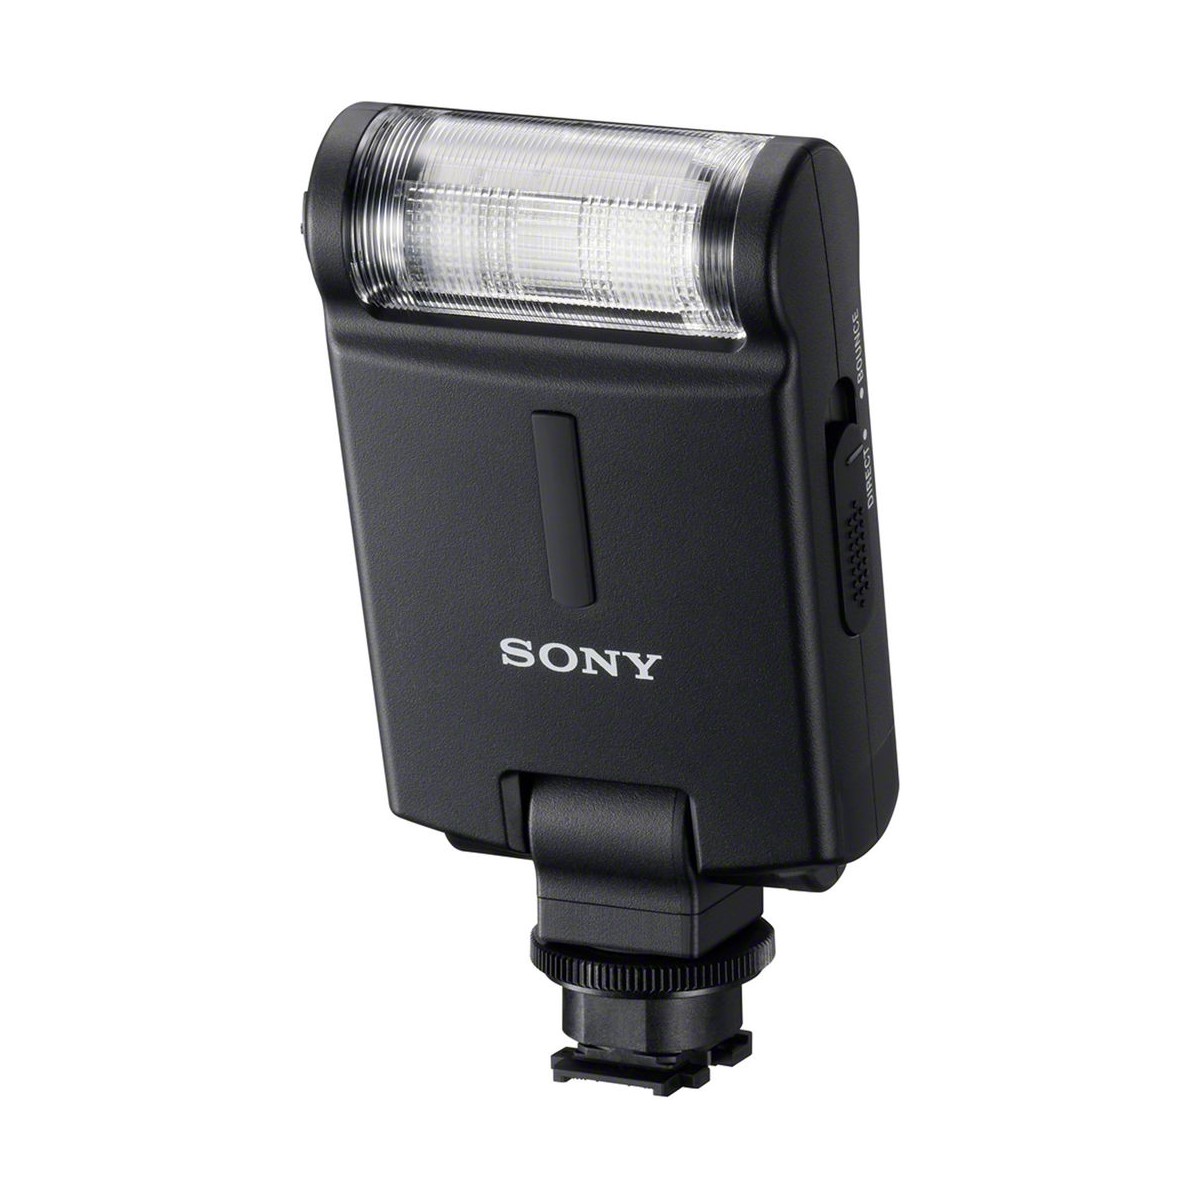 Sony HVLF20AM TTL Digital Flash for Sony Alpha Digital SLR Cameras 